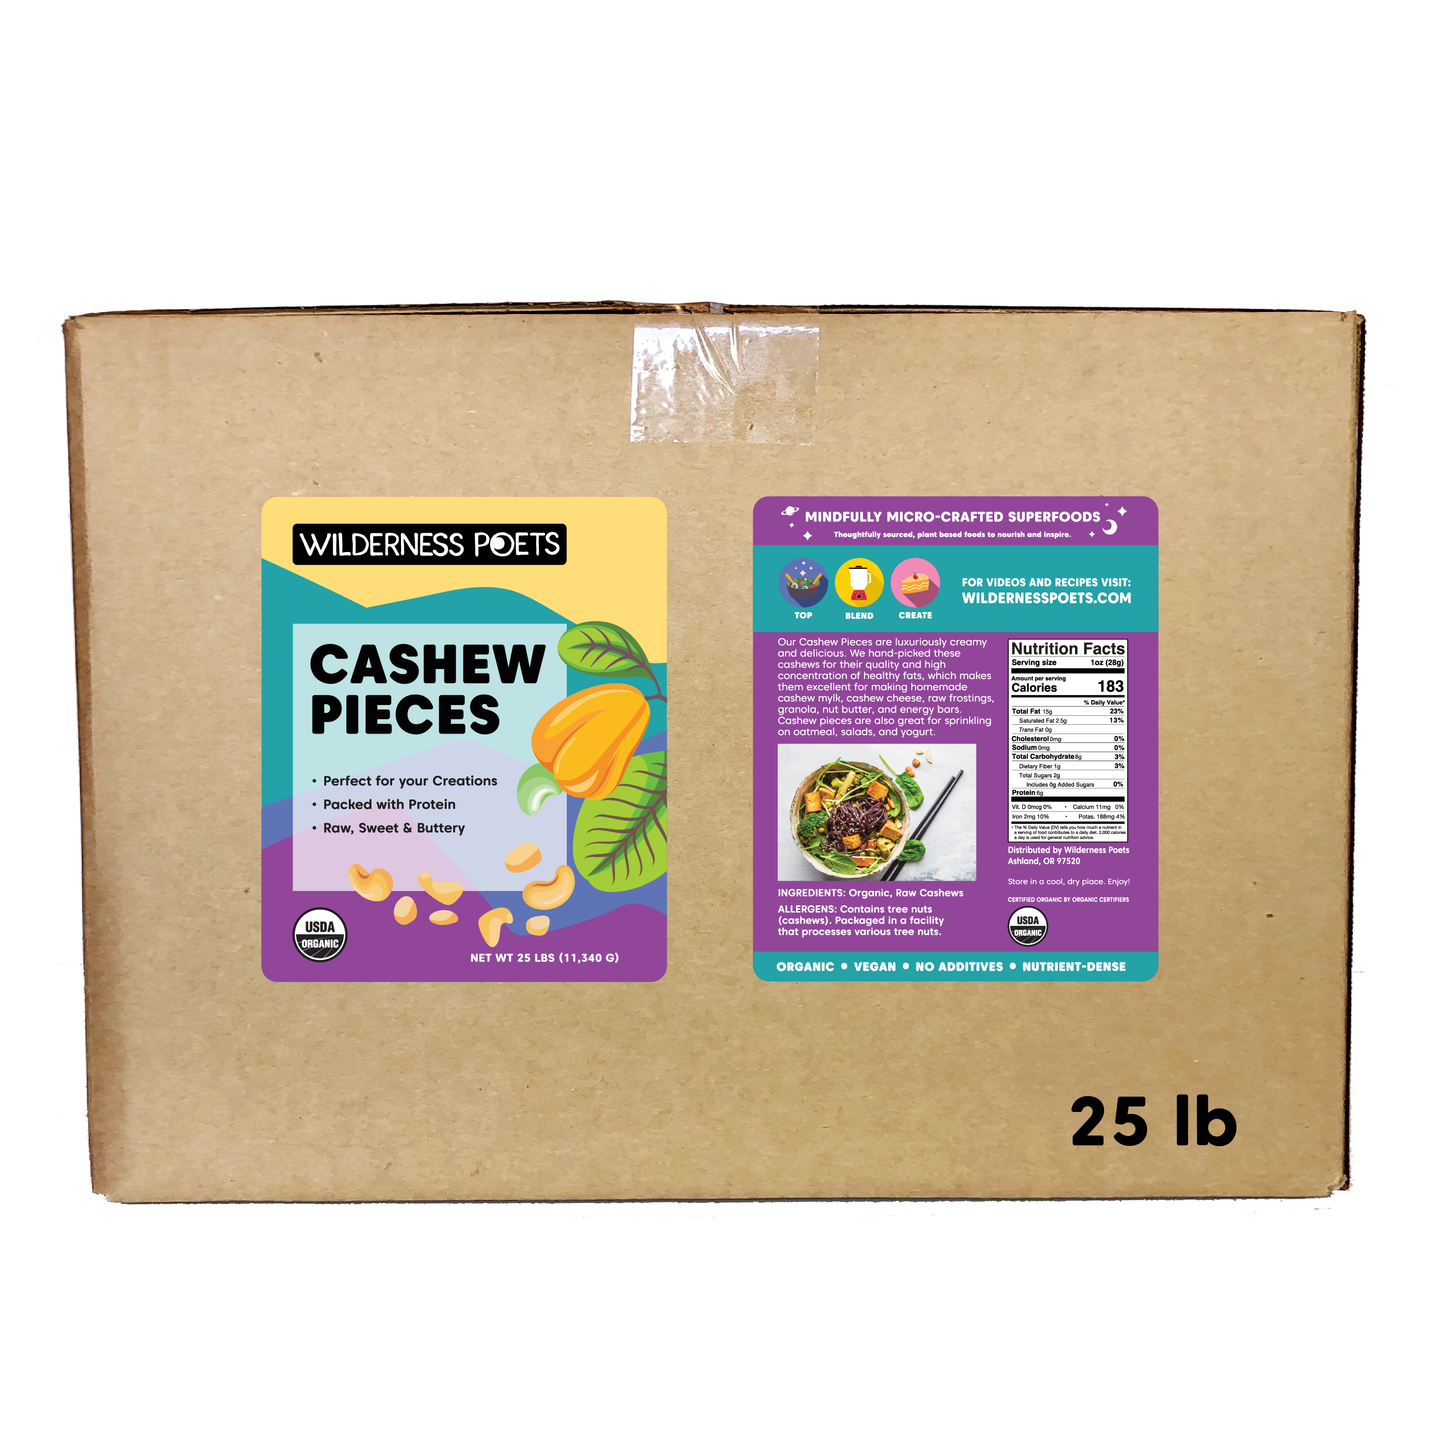 Cashew Pieces - Halves & Pieces, Organic